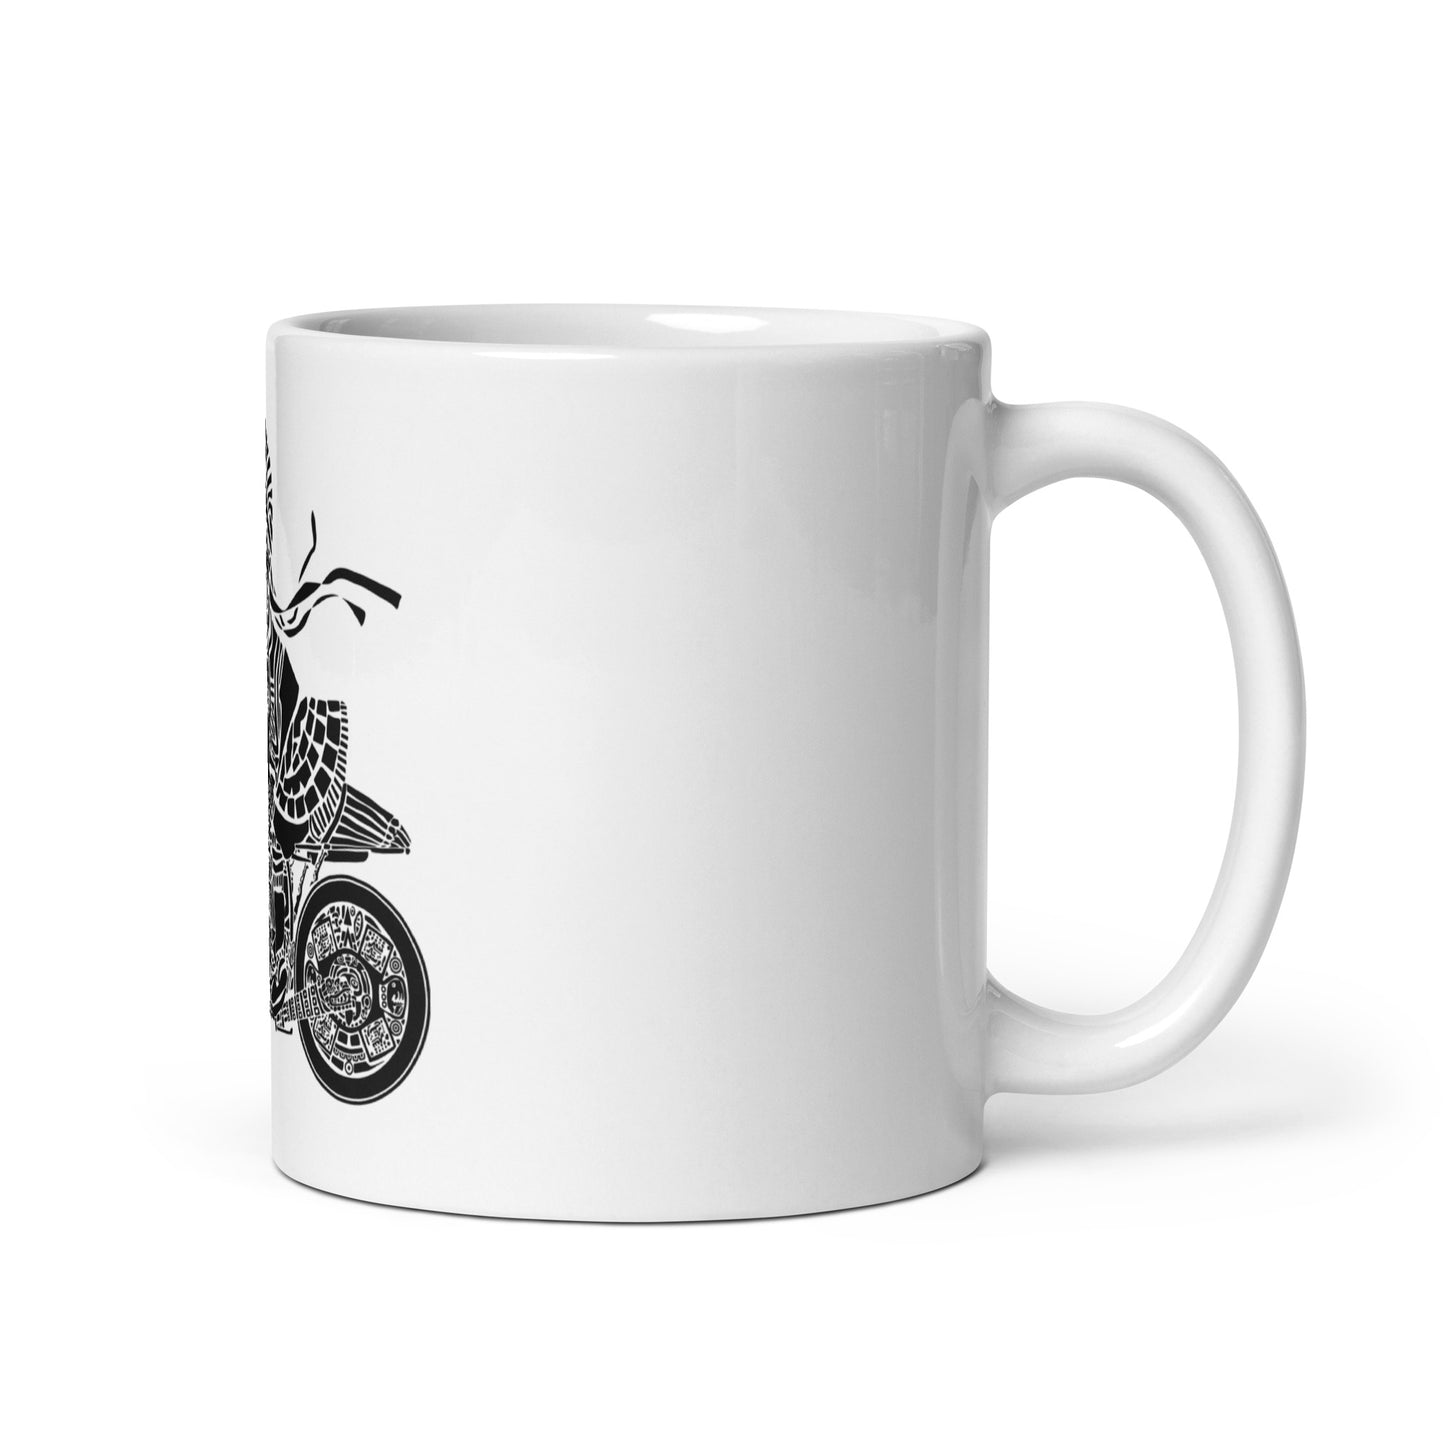 BellavanceInk: Coffee Mug With Mayan Warrior Riding Their Cafe Racer